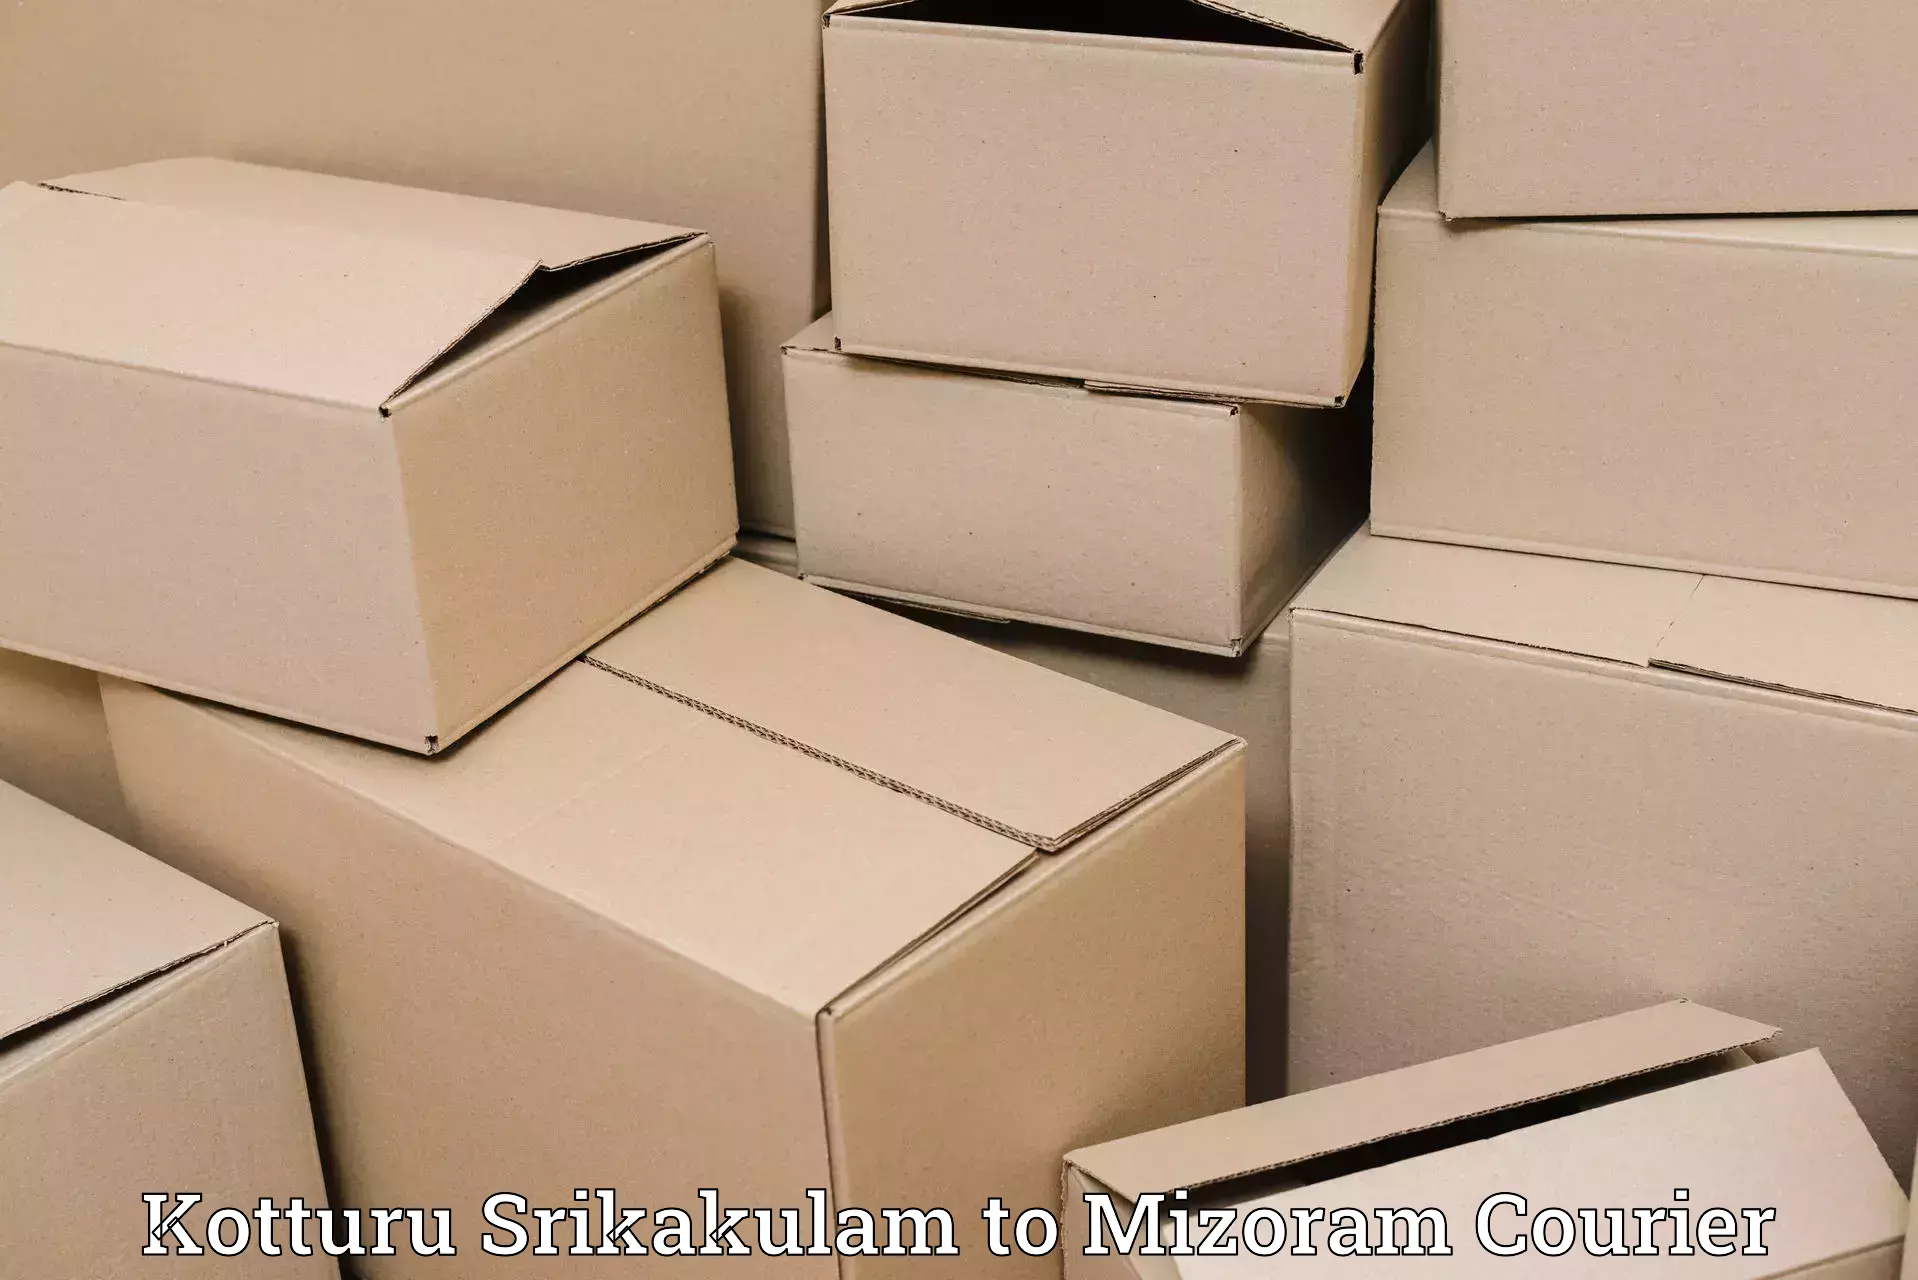 Automated shipping Kotturu Srikakulam to Mizoram